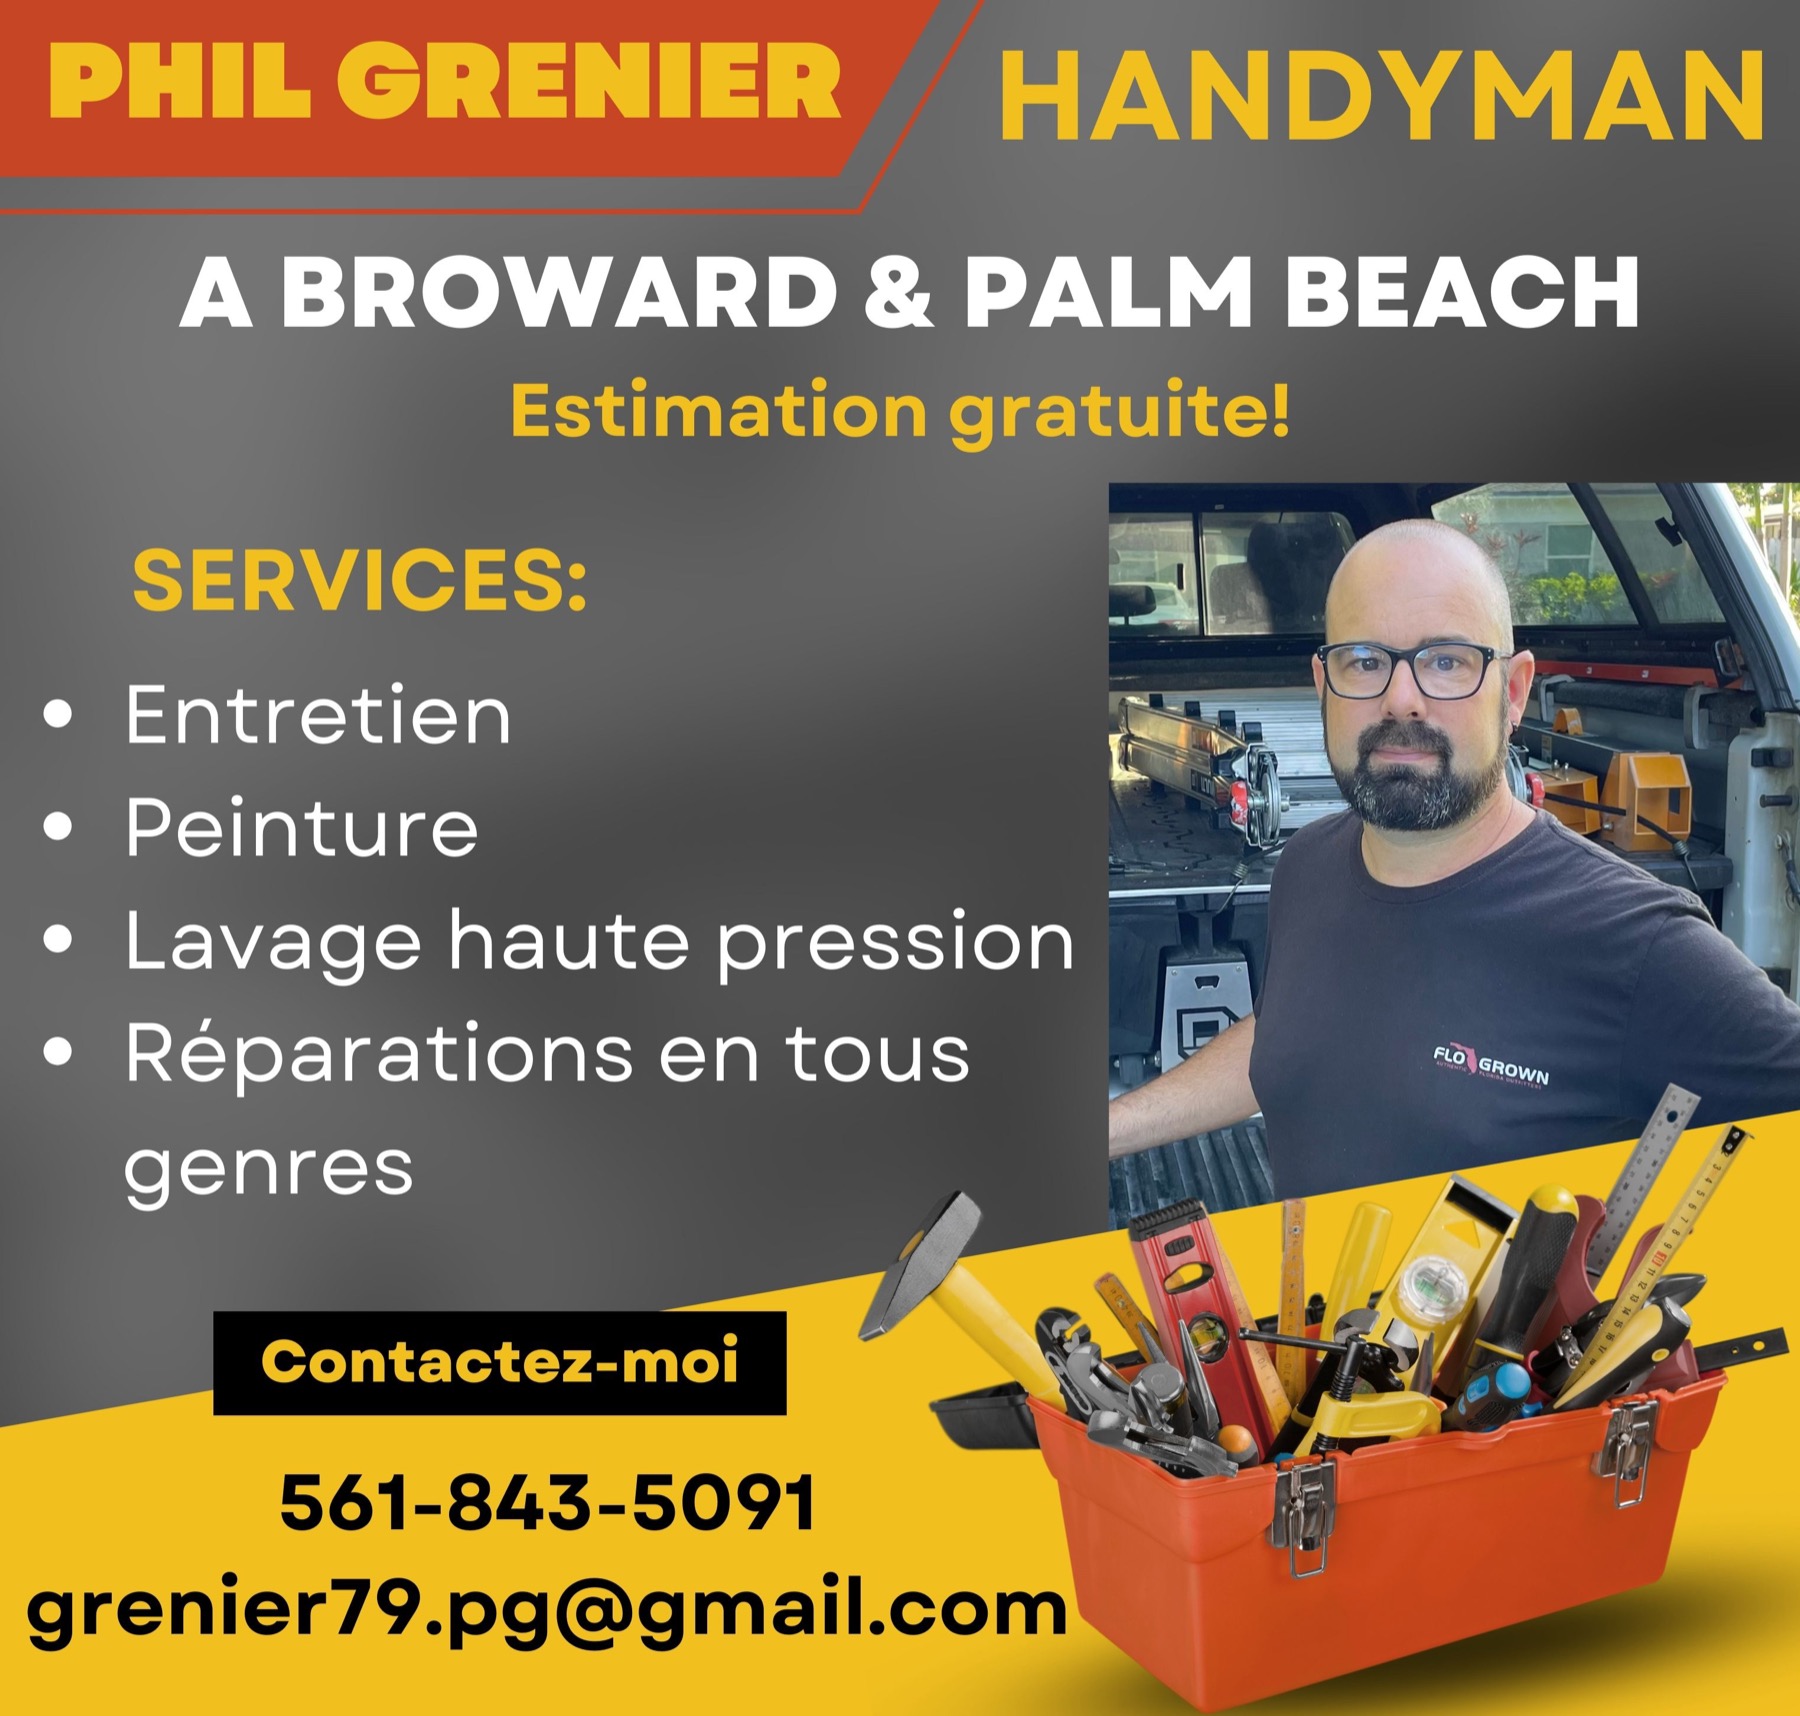 Phil Grenier / Handyman en Floride